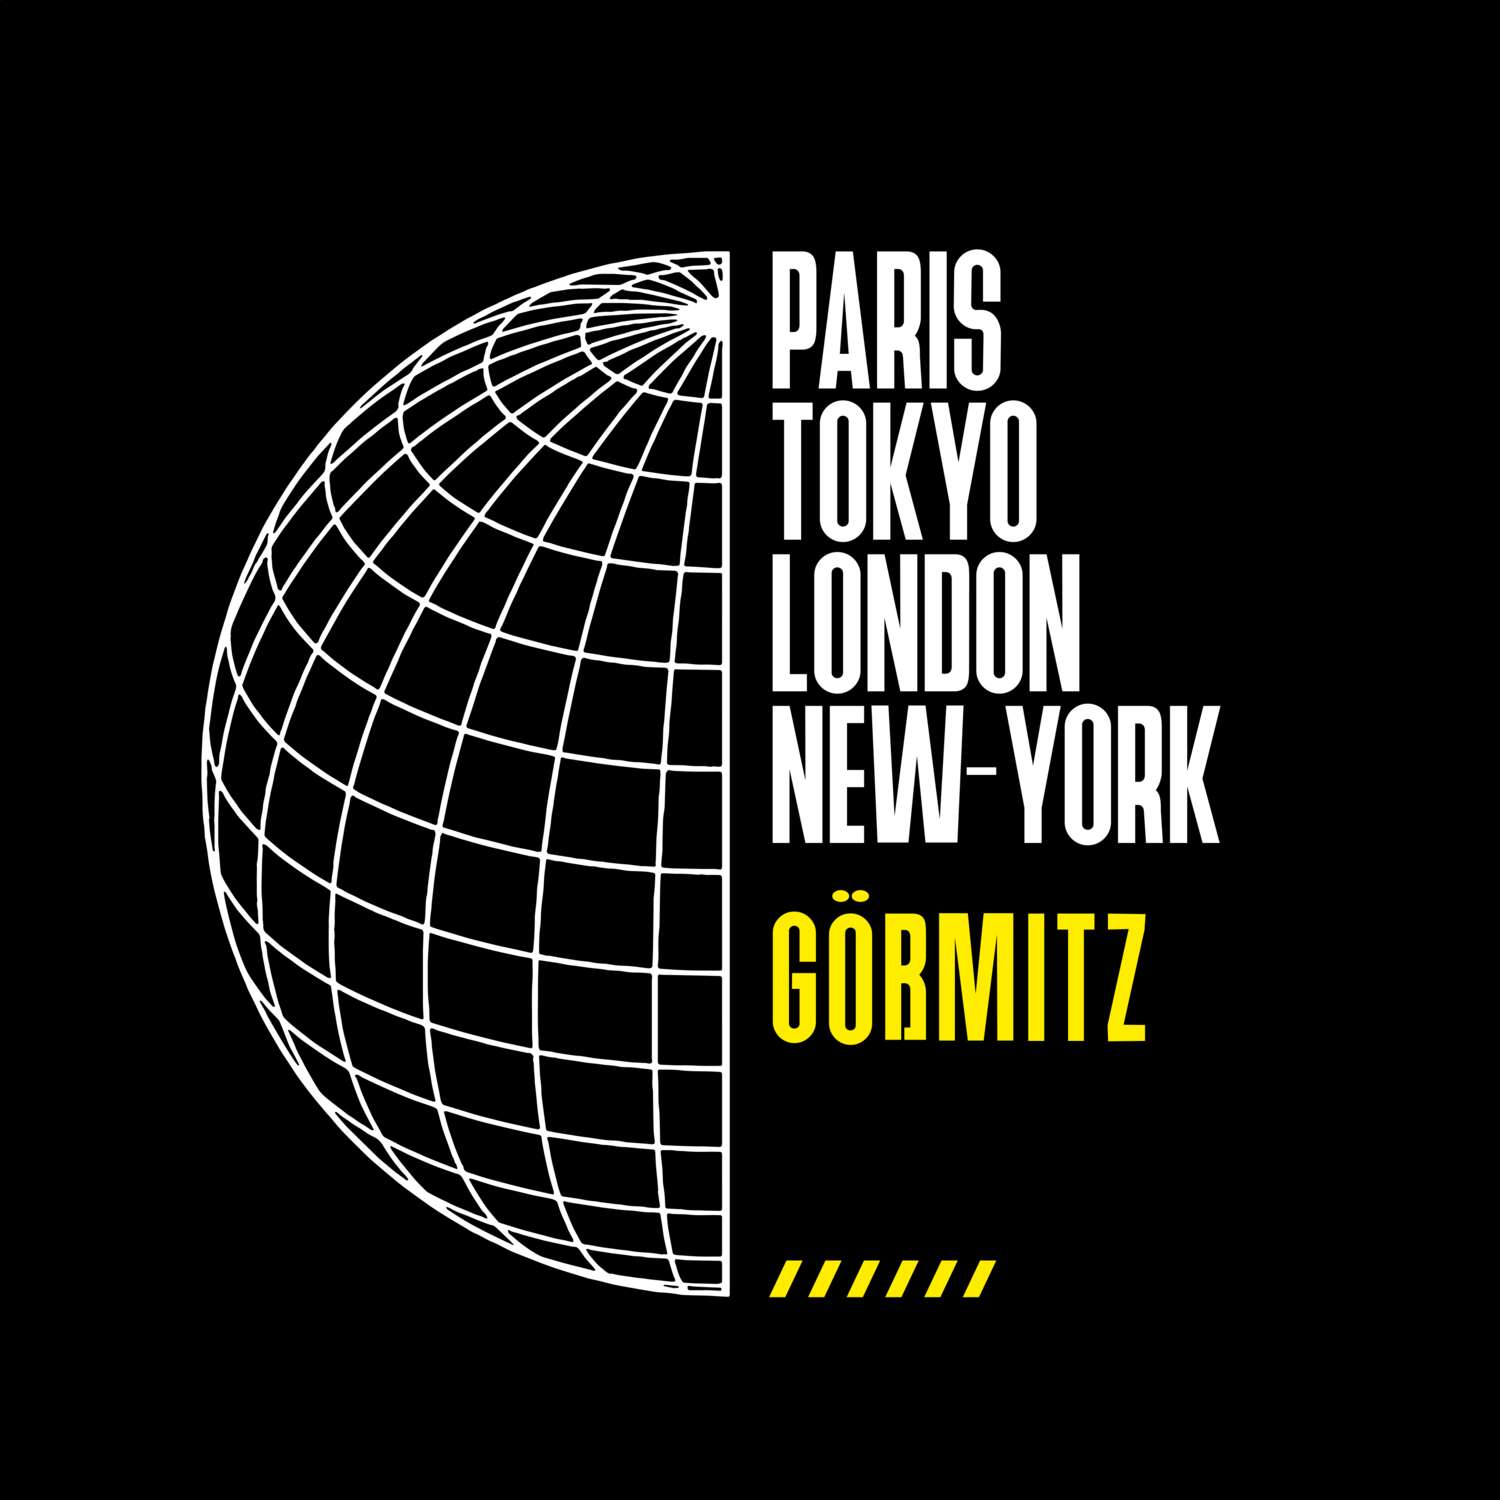 Gößmitz T-Shirt »Paris Tokyo London«